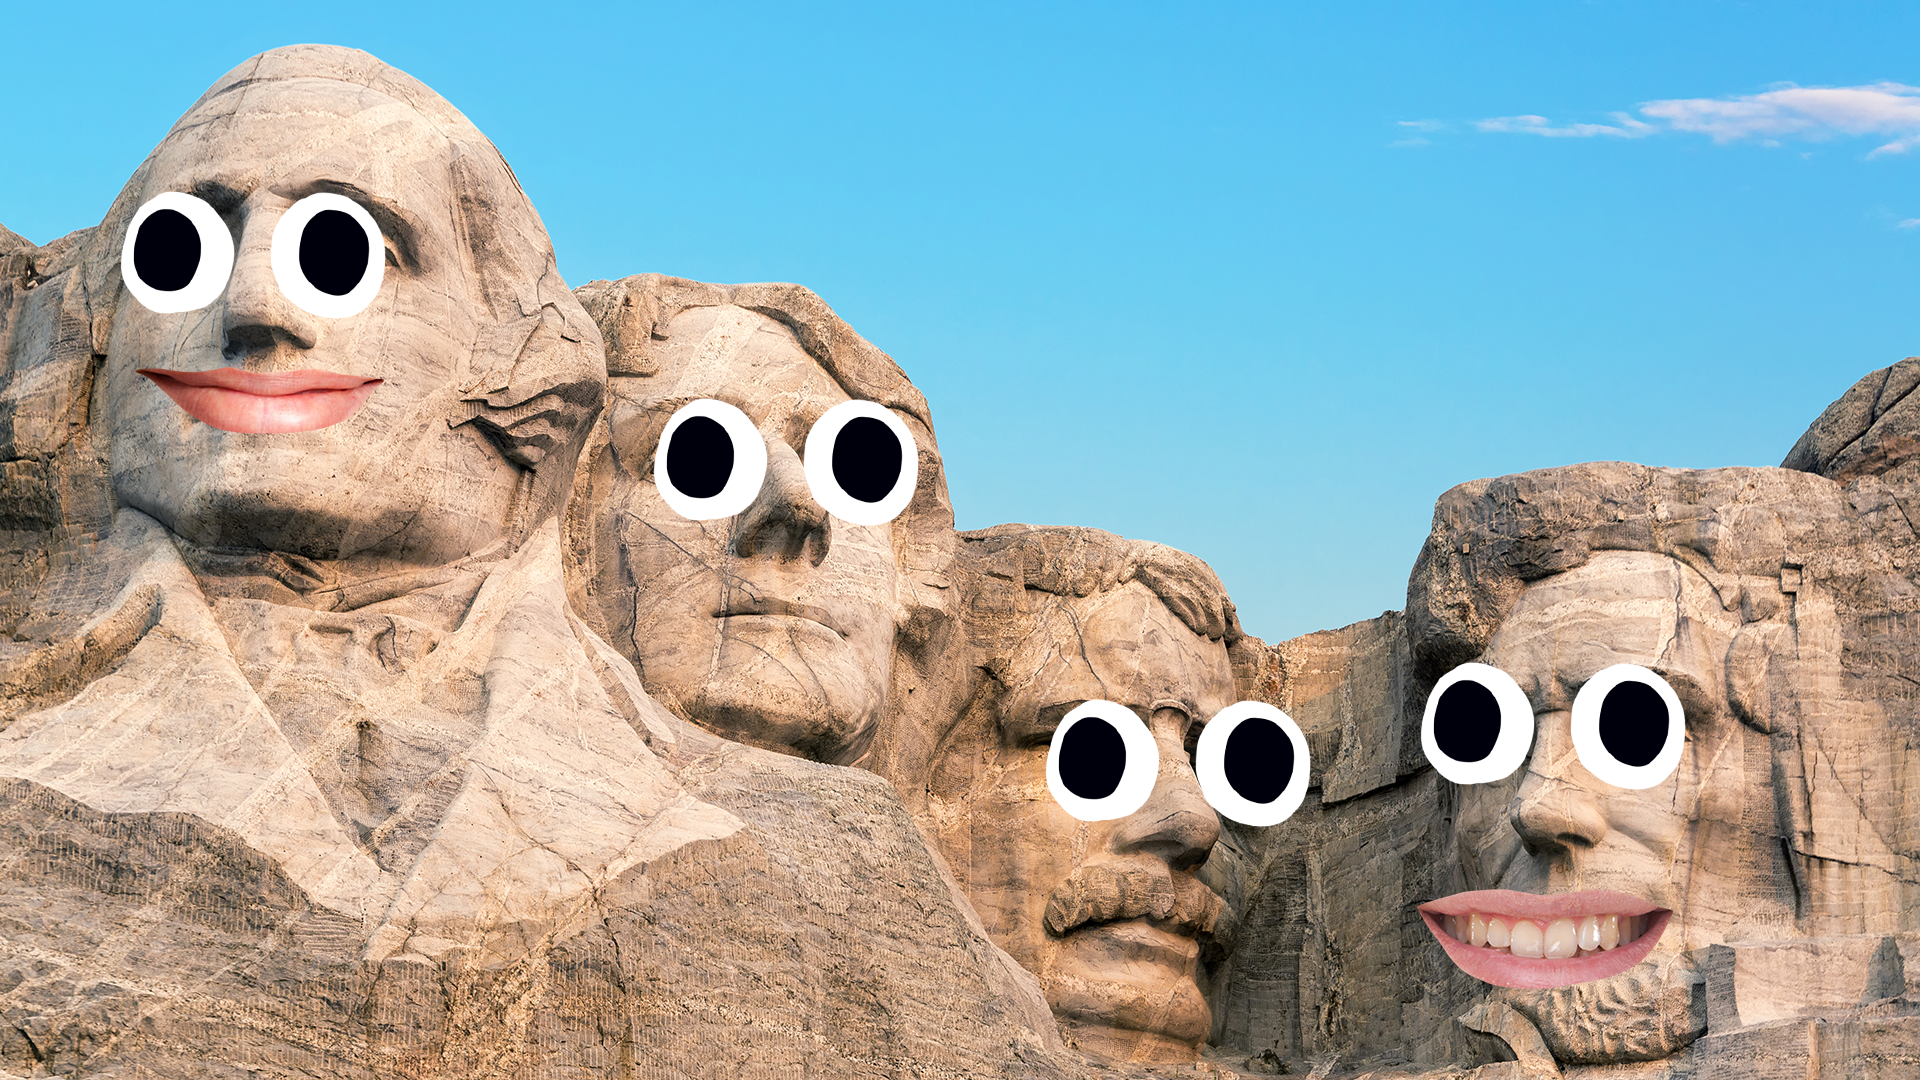 Goofy looking Mount Rushmore